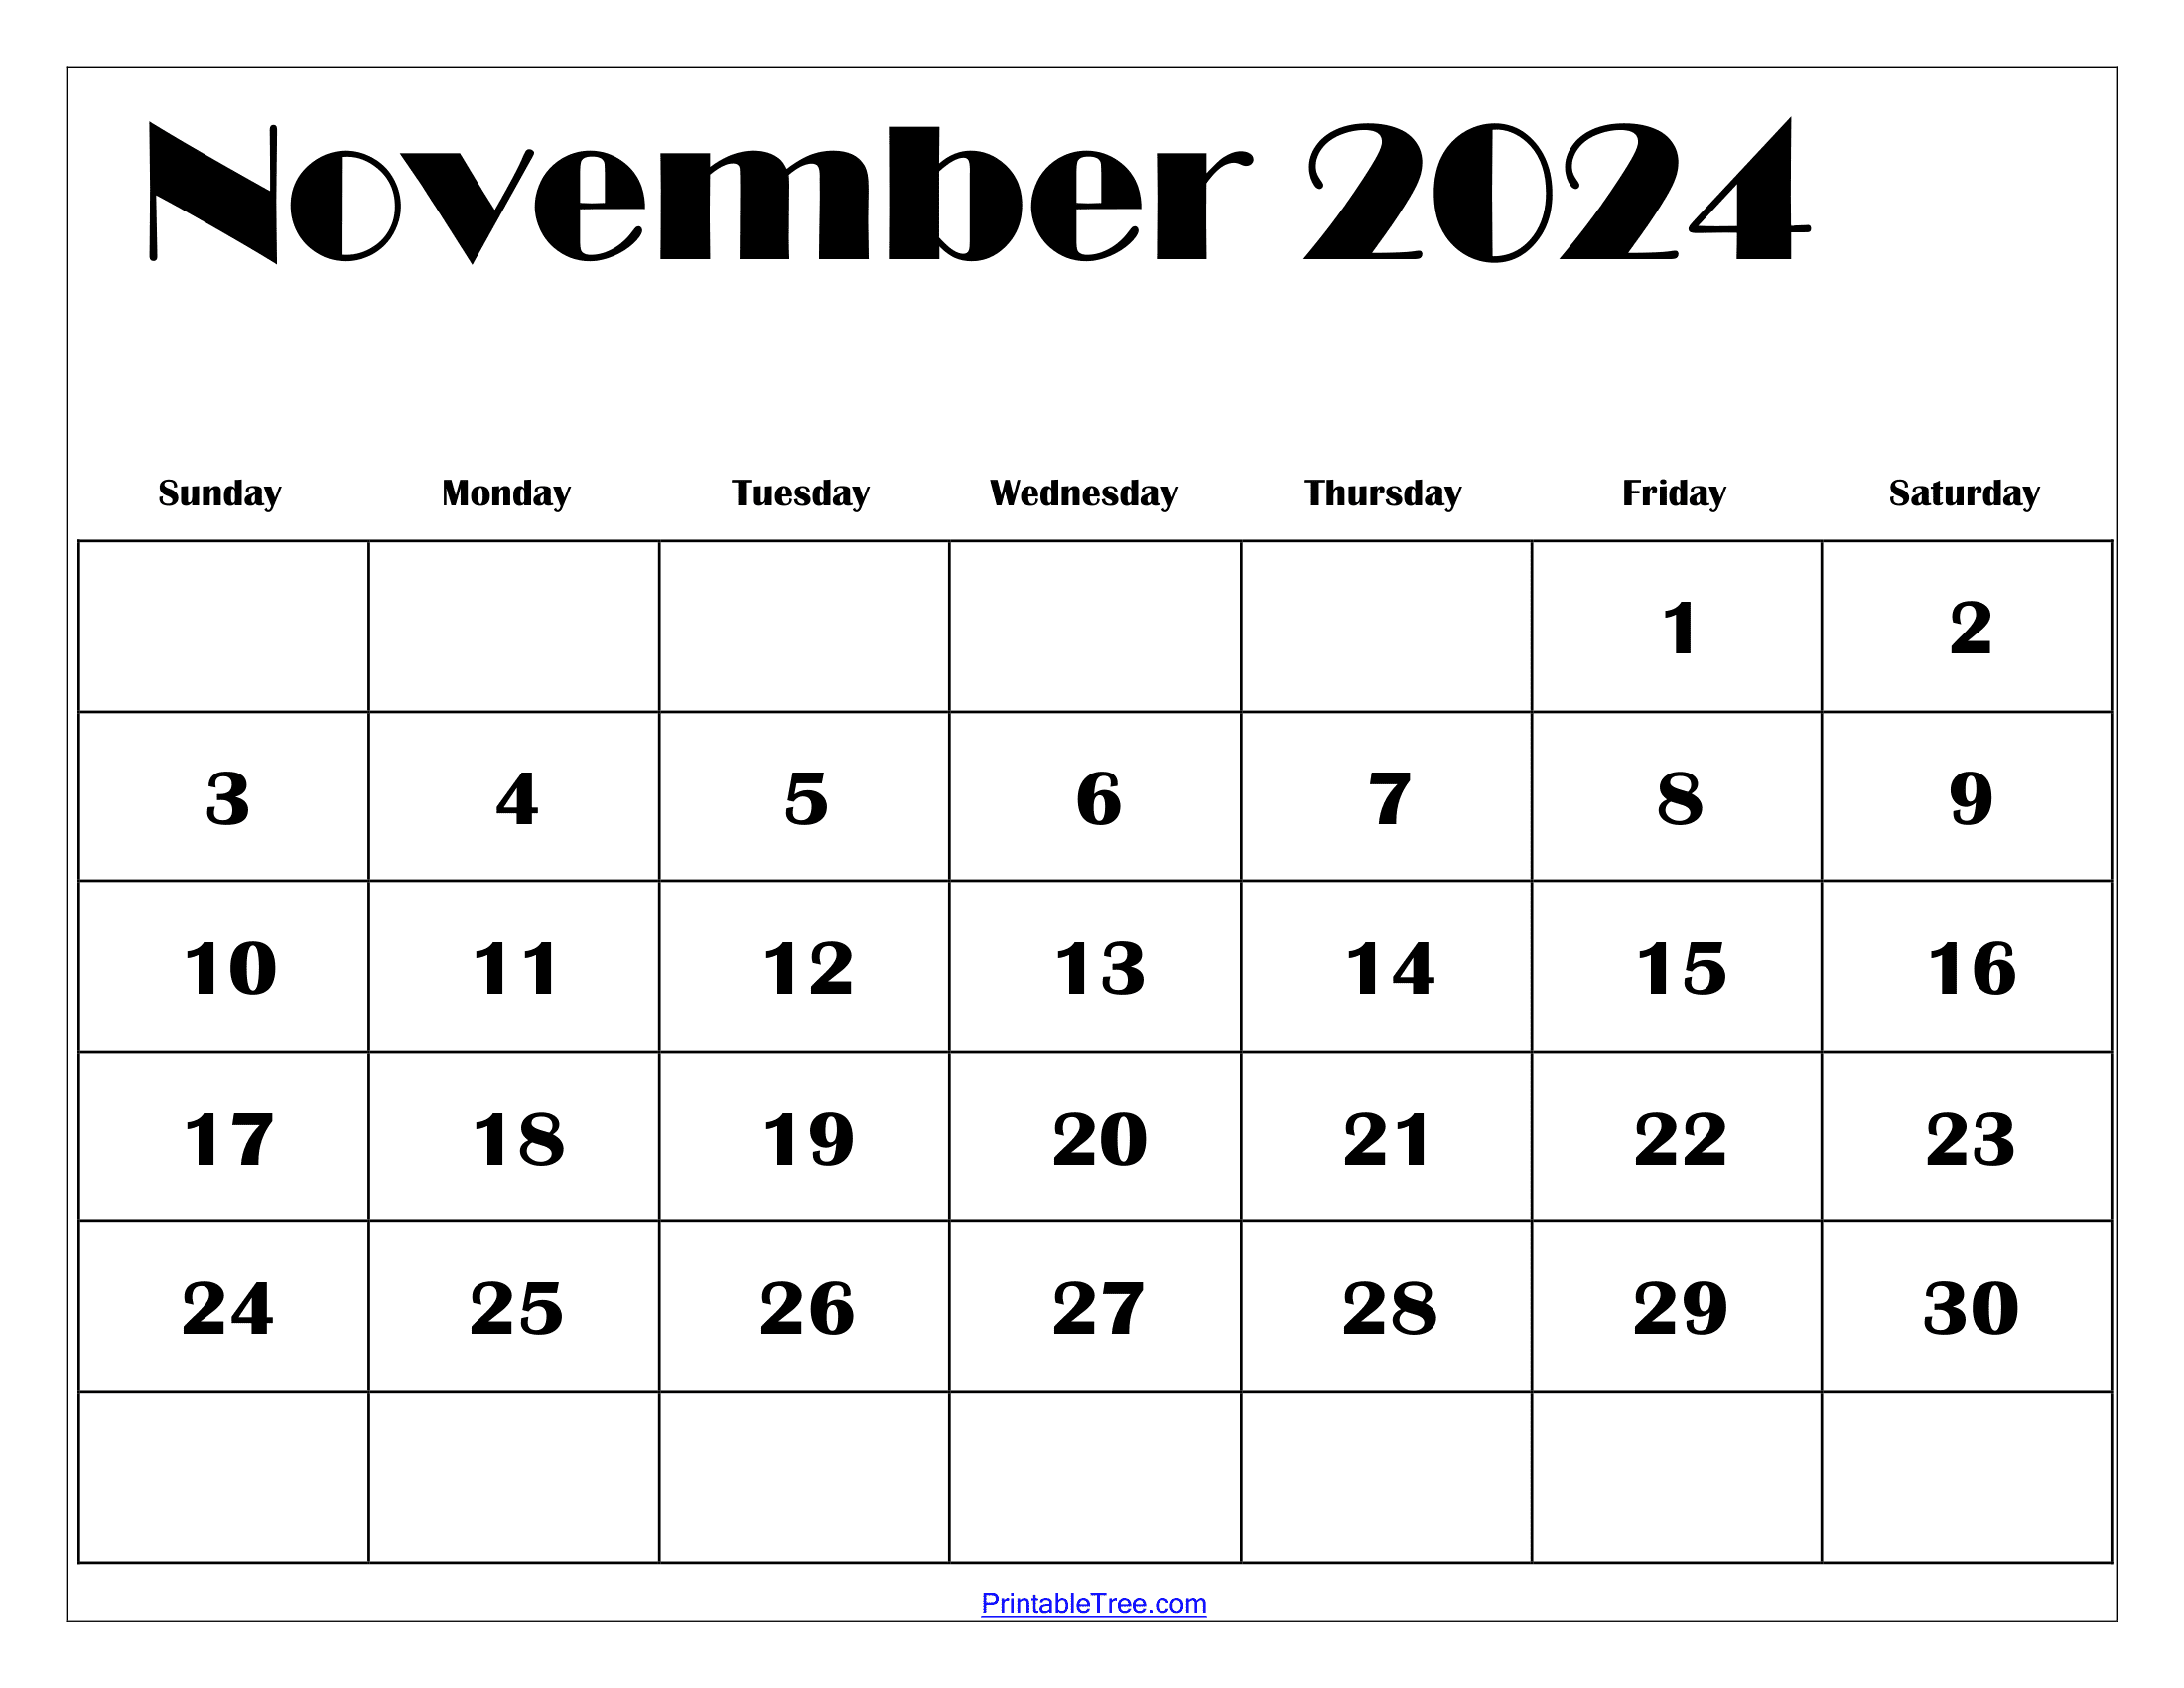 November 2024 Calendar Printable Pdf Template With Holidays intended for Free Printable Blank Calendar 2024 November